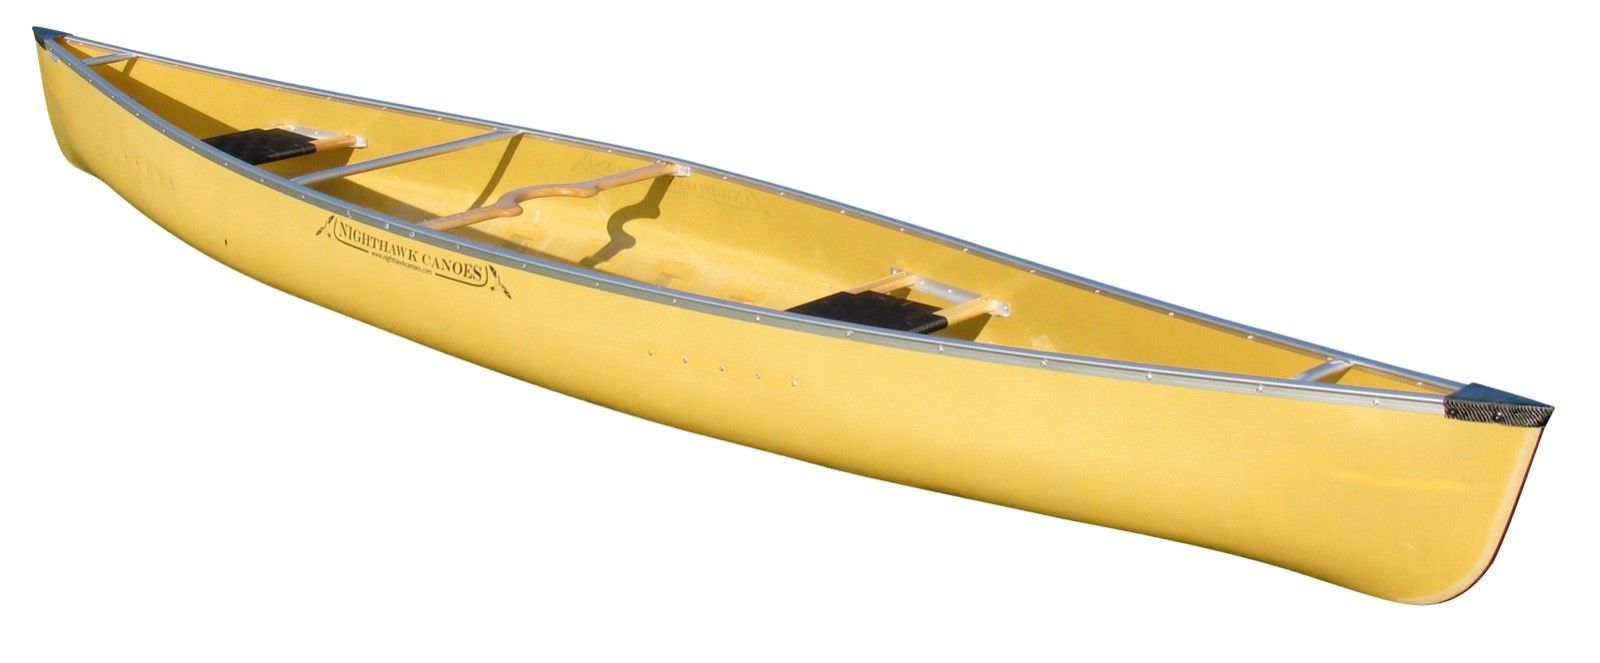 16' Lightweight Composite Canoe, Nighthawk Canoes, Cygnus 16